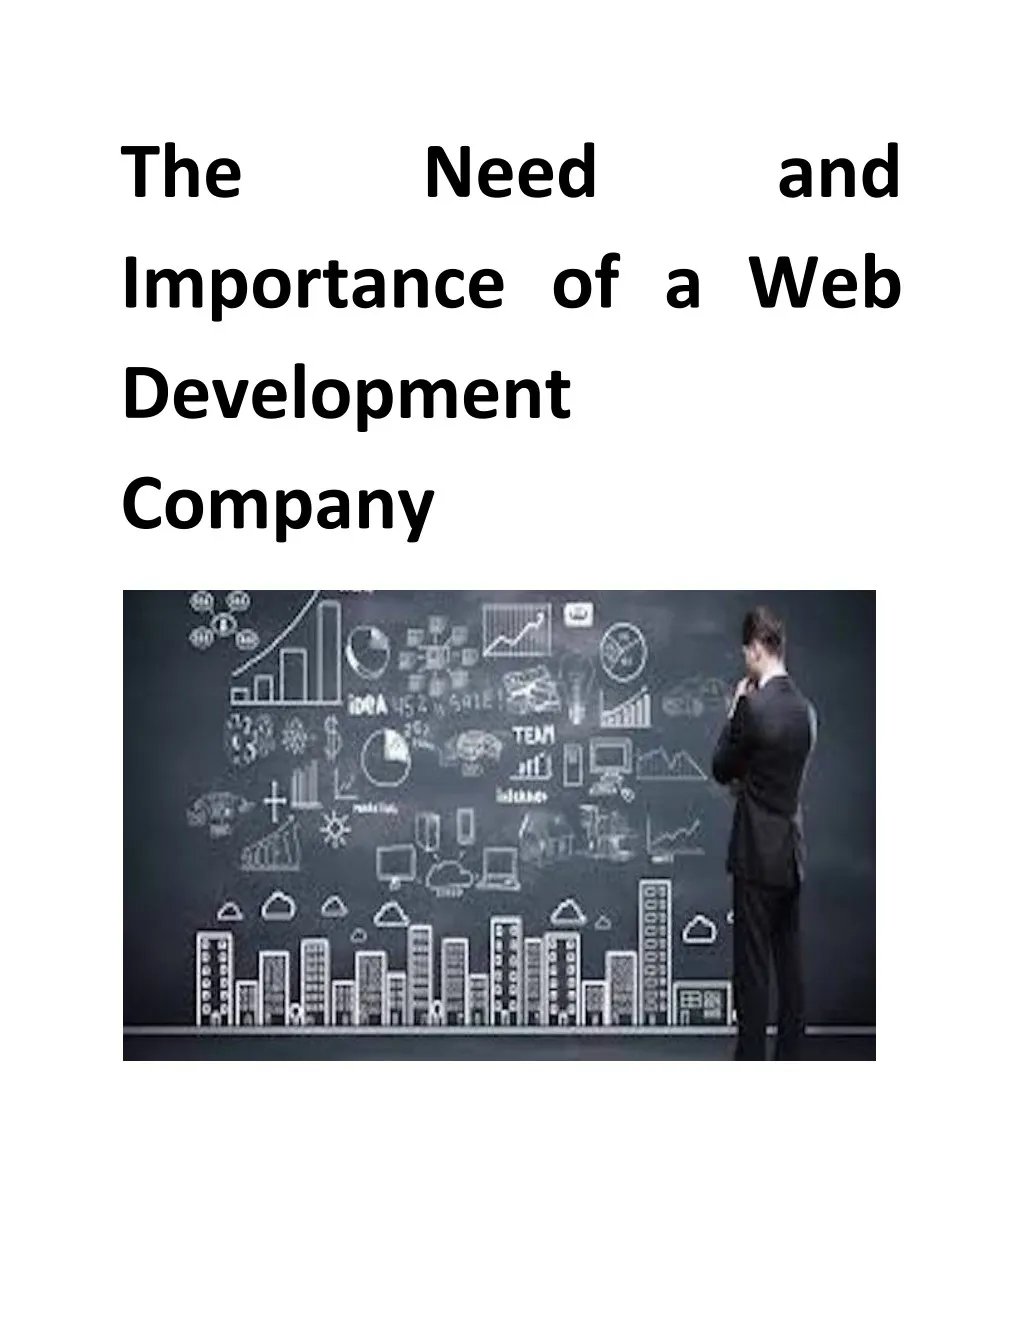 the importance of a web development company